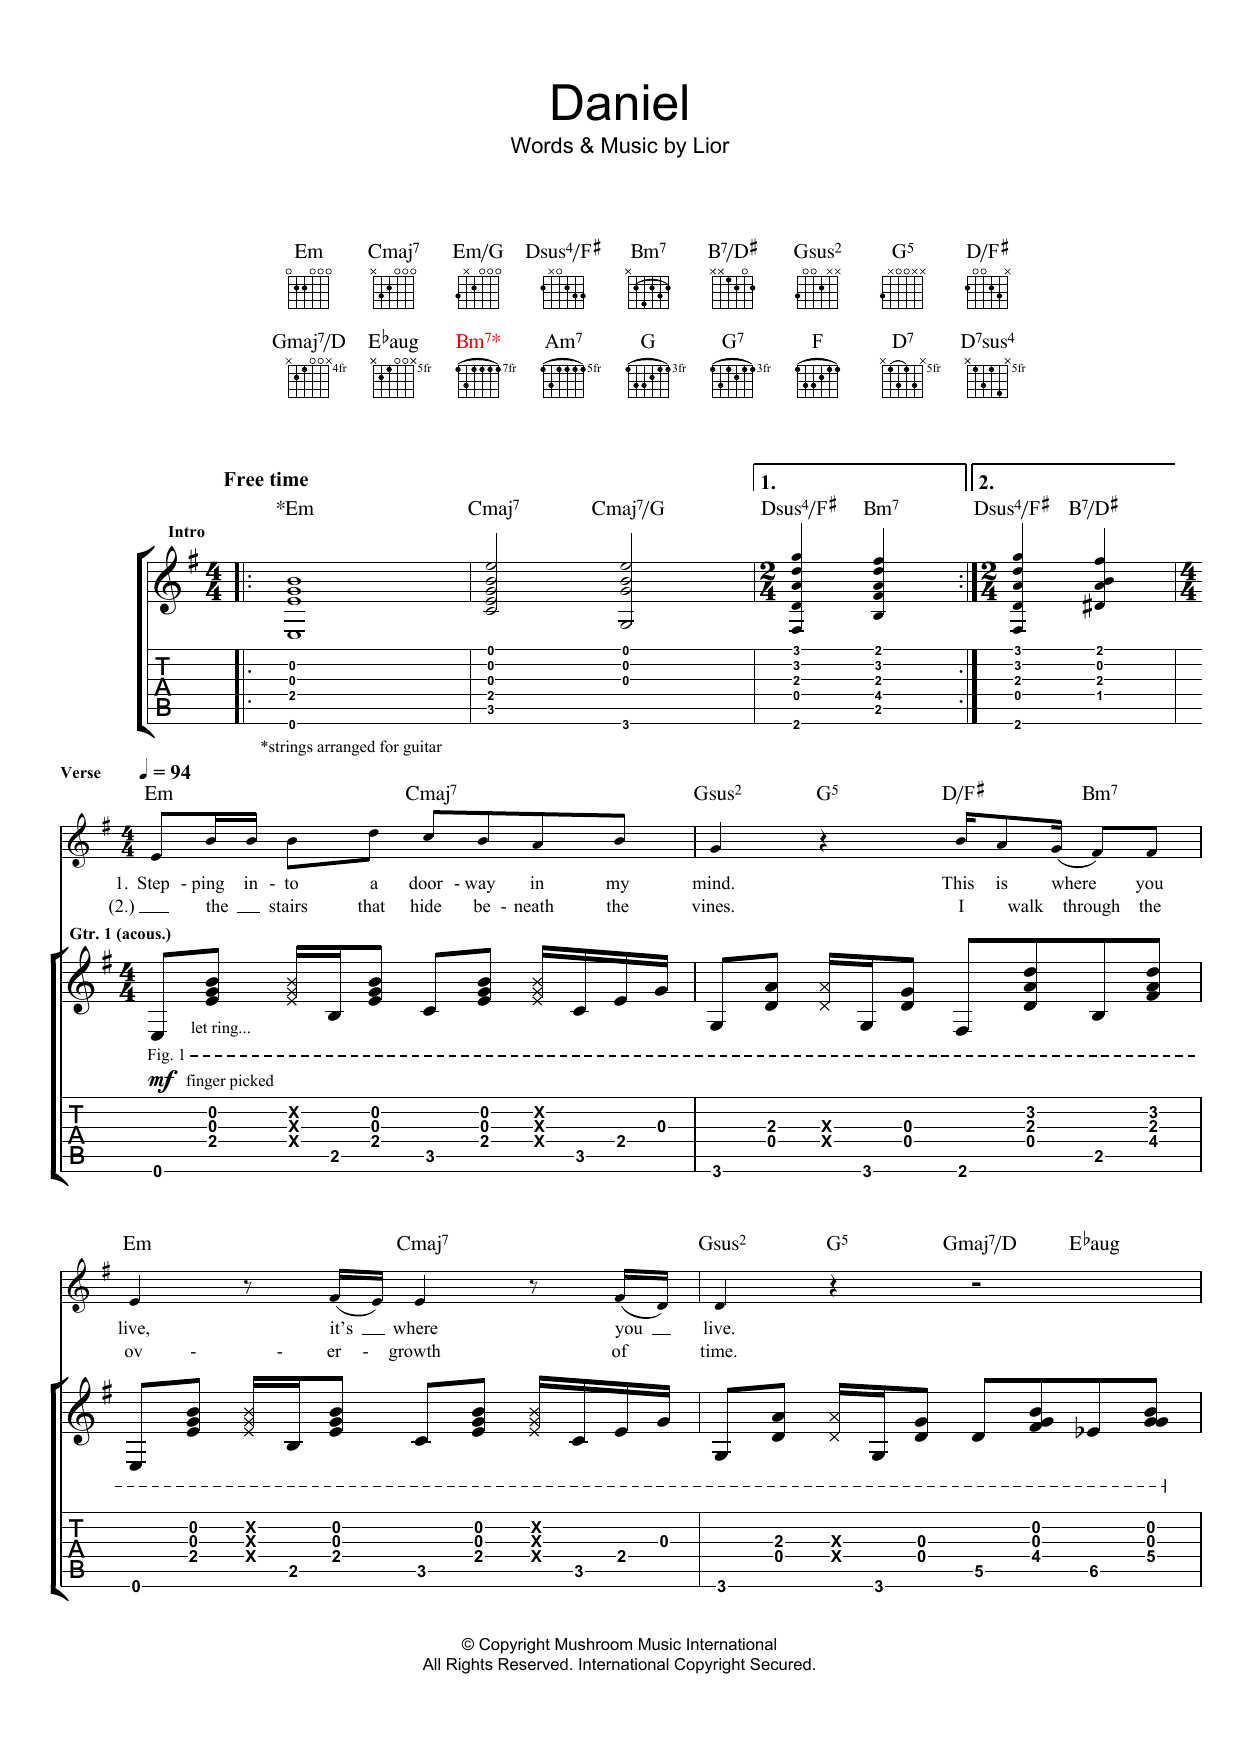 Lior Daniel Sheet Music Notes & Chords for Guitar Tab - Download or Print PDF